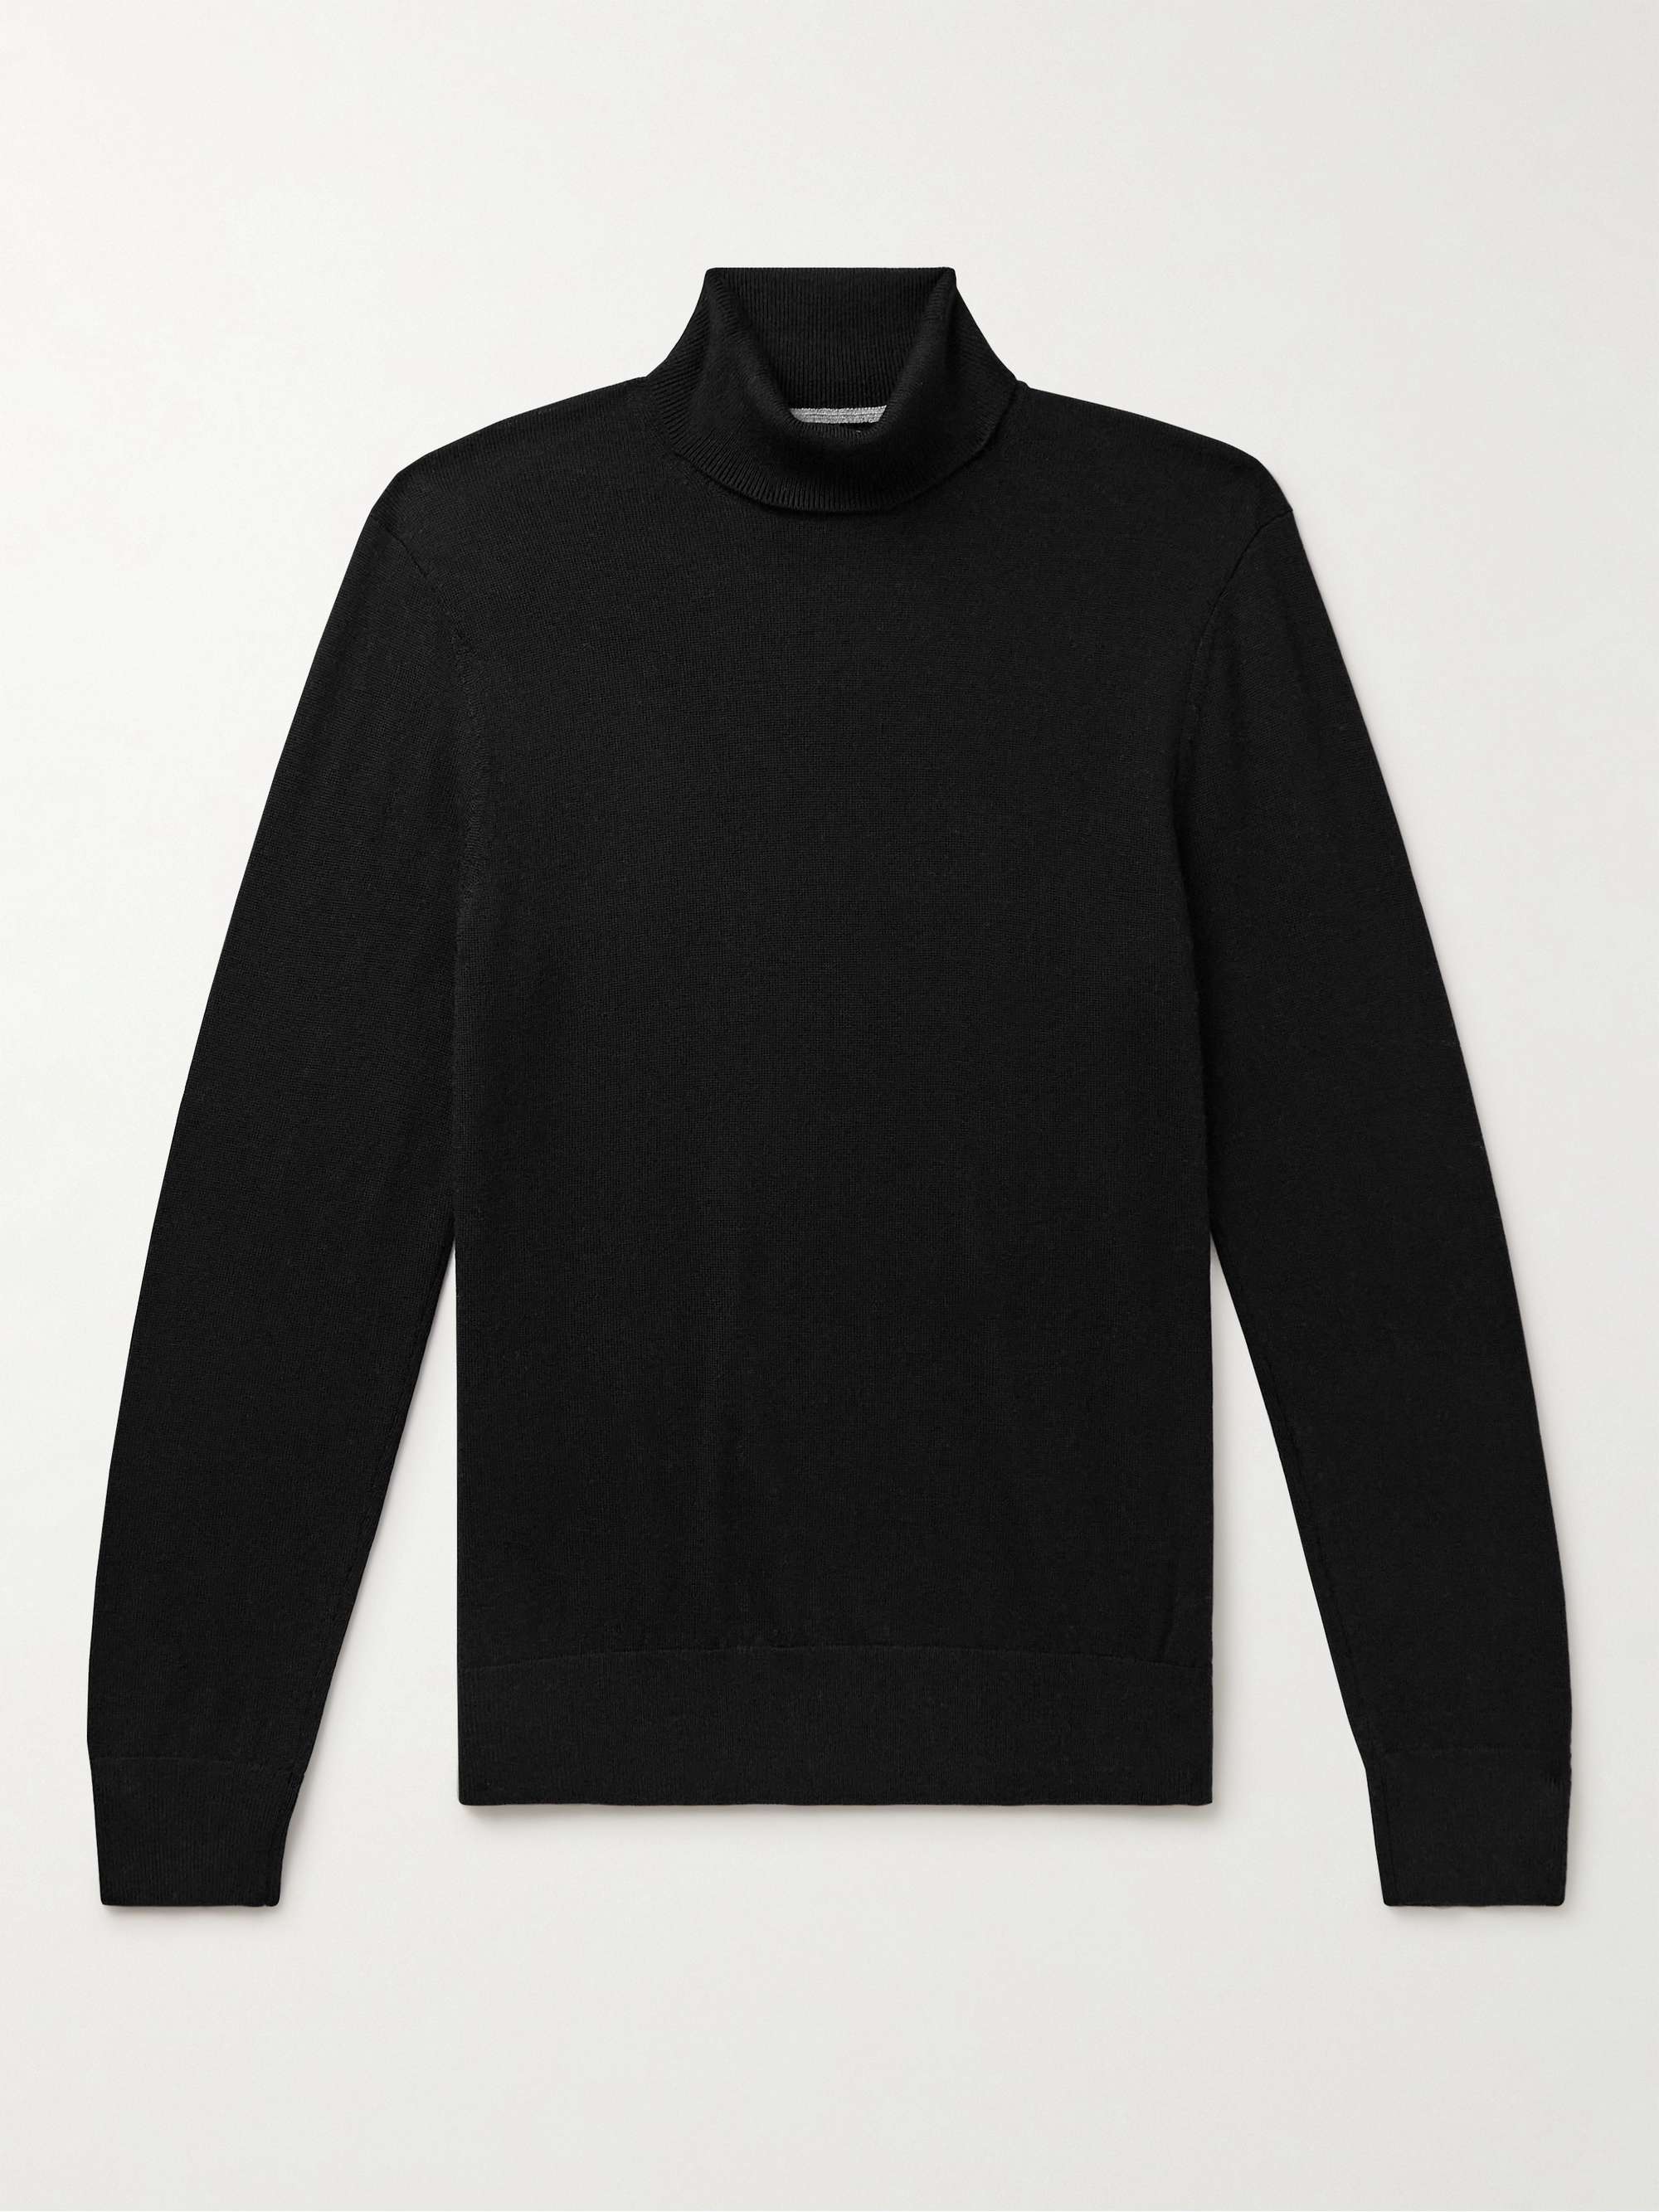 CLUB MONACO Slim-Fit Merino Wool Rollneck Sweater for Men | MR PORTER